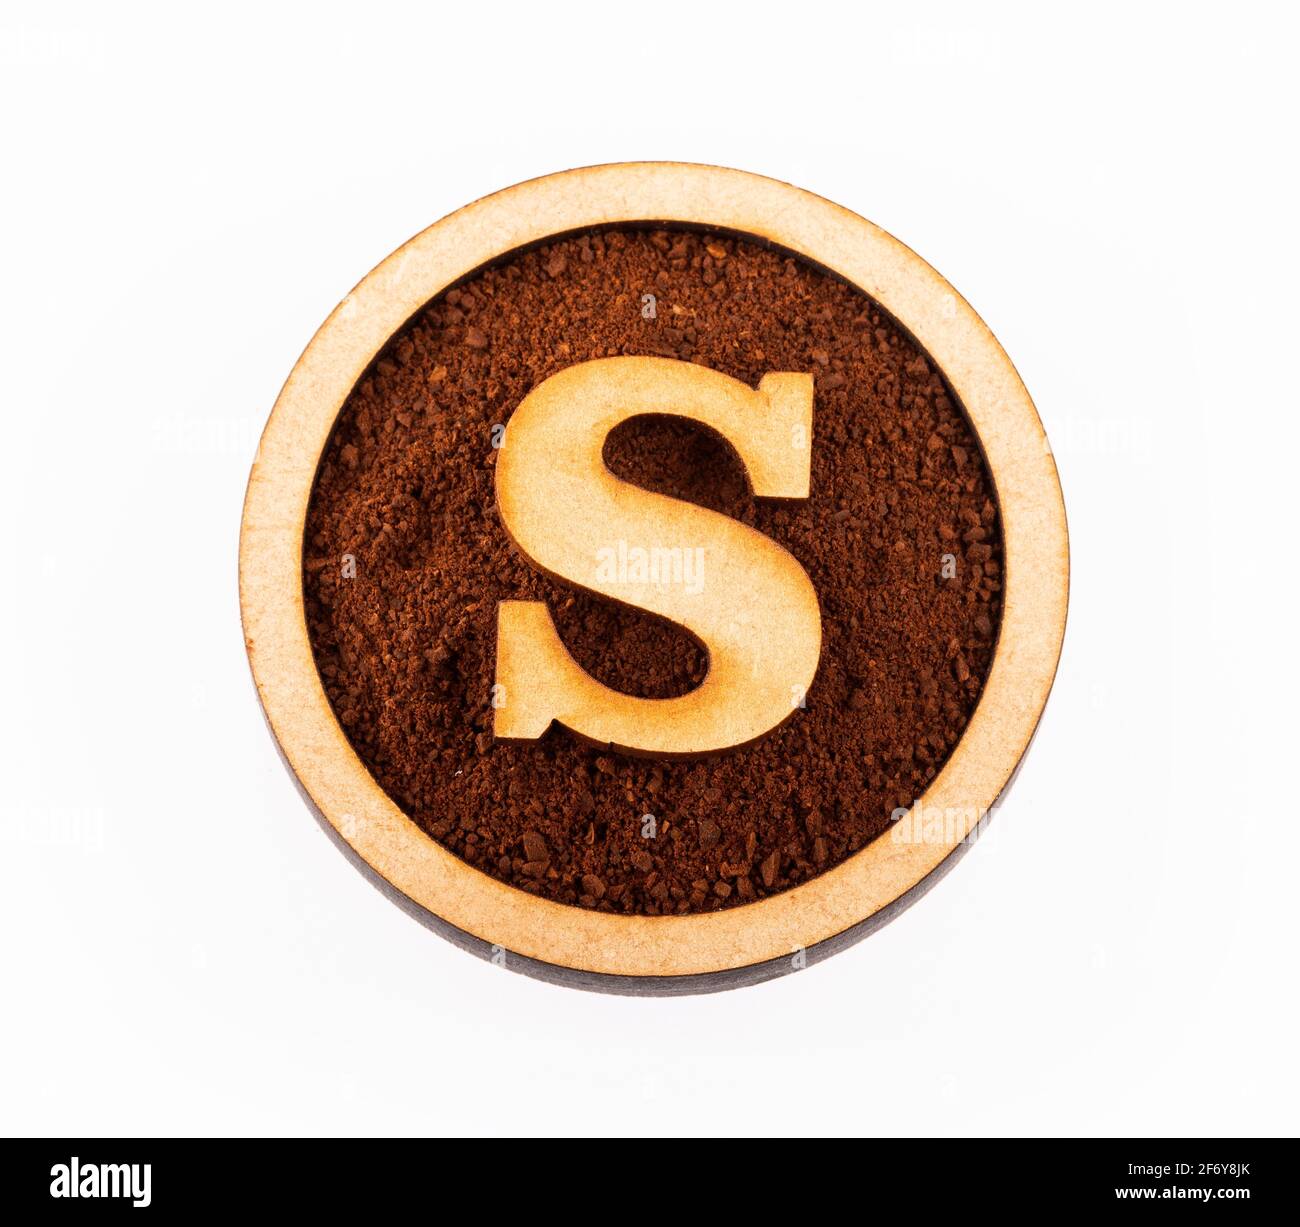 S, wooden alphabet letter - Ground organic coffee. Coffea Stock Photo